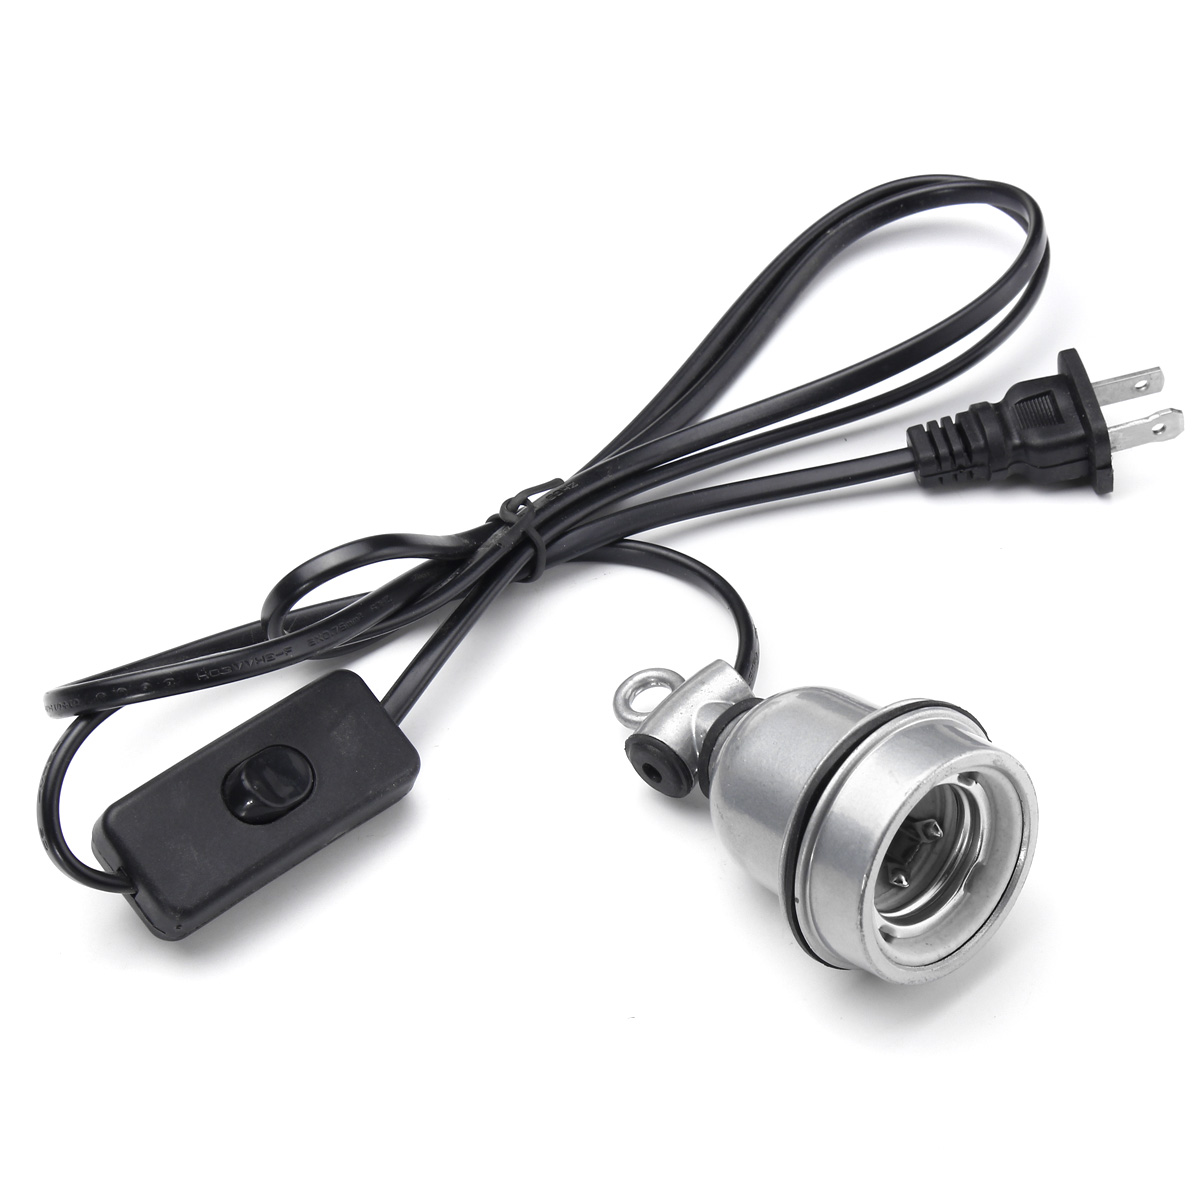 E27-100W-Waterproof-Heat-Lamp-Holder-For-Pet-With-Switch-US-UK-AU-EU-Plug-1199871